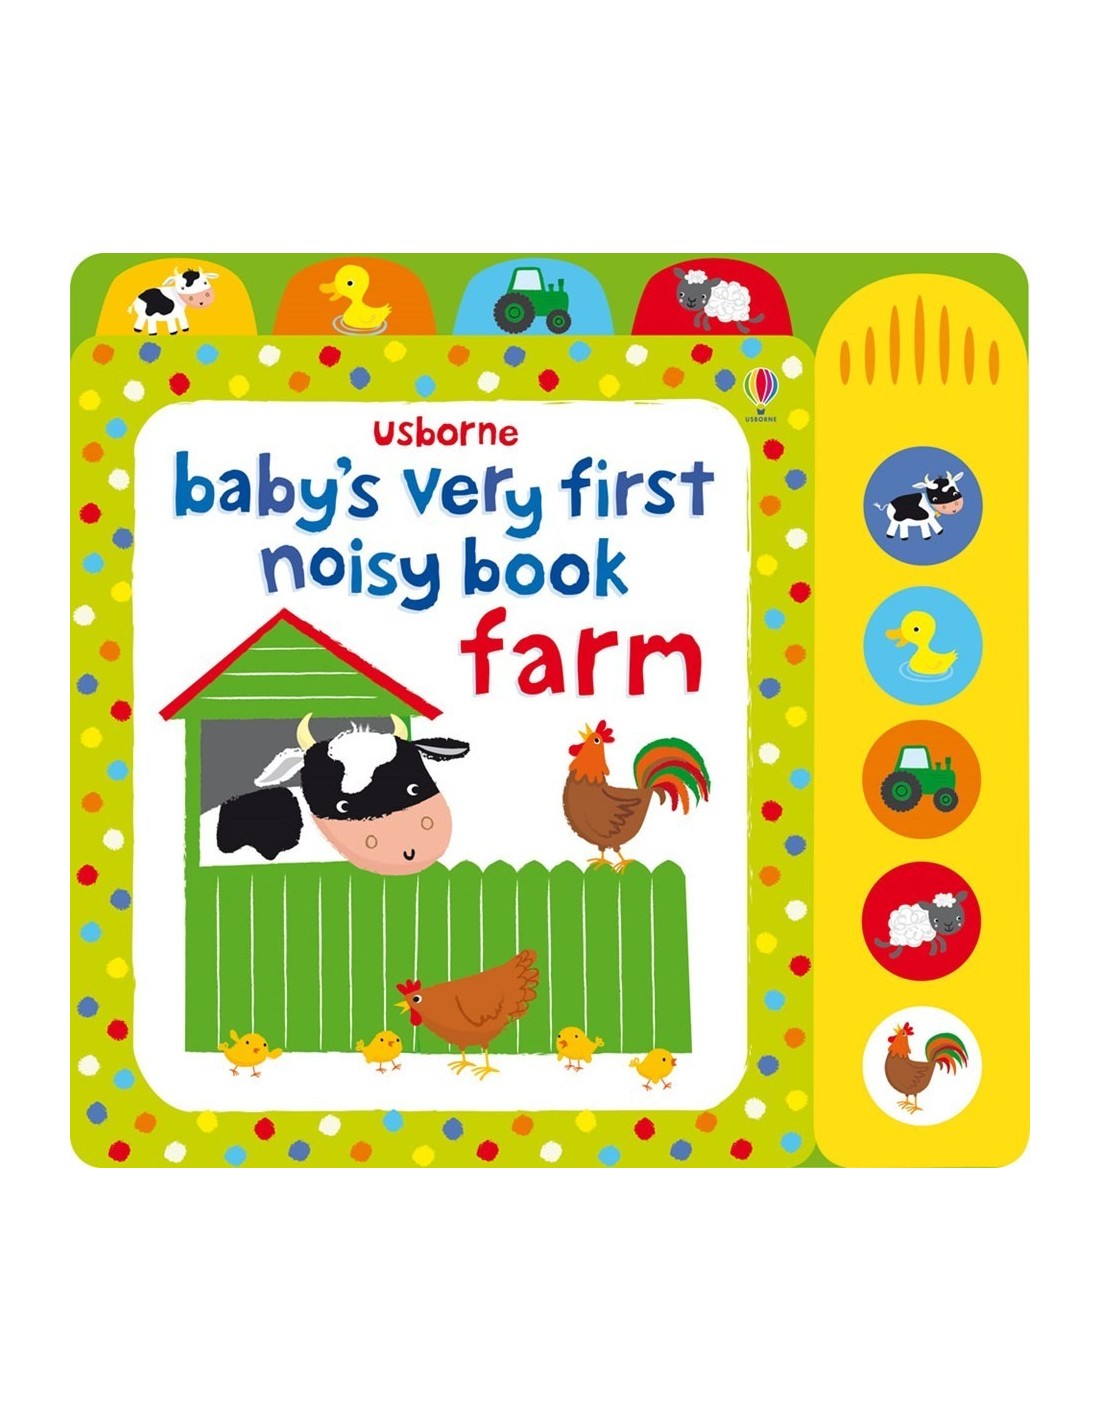 Baby's very first noisy book: Farm